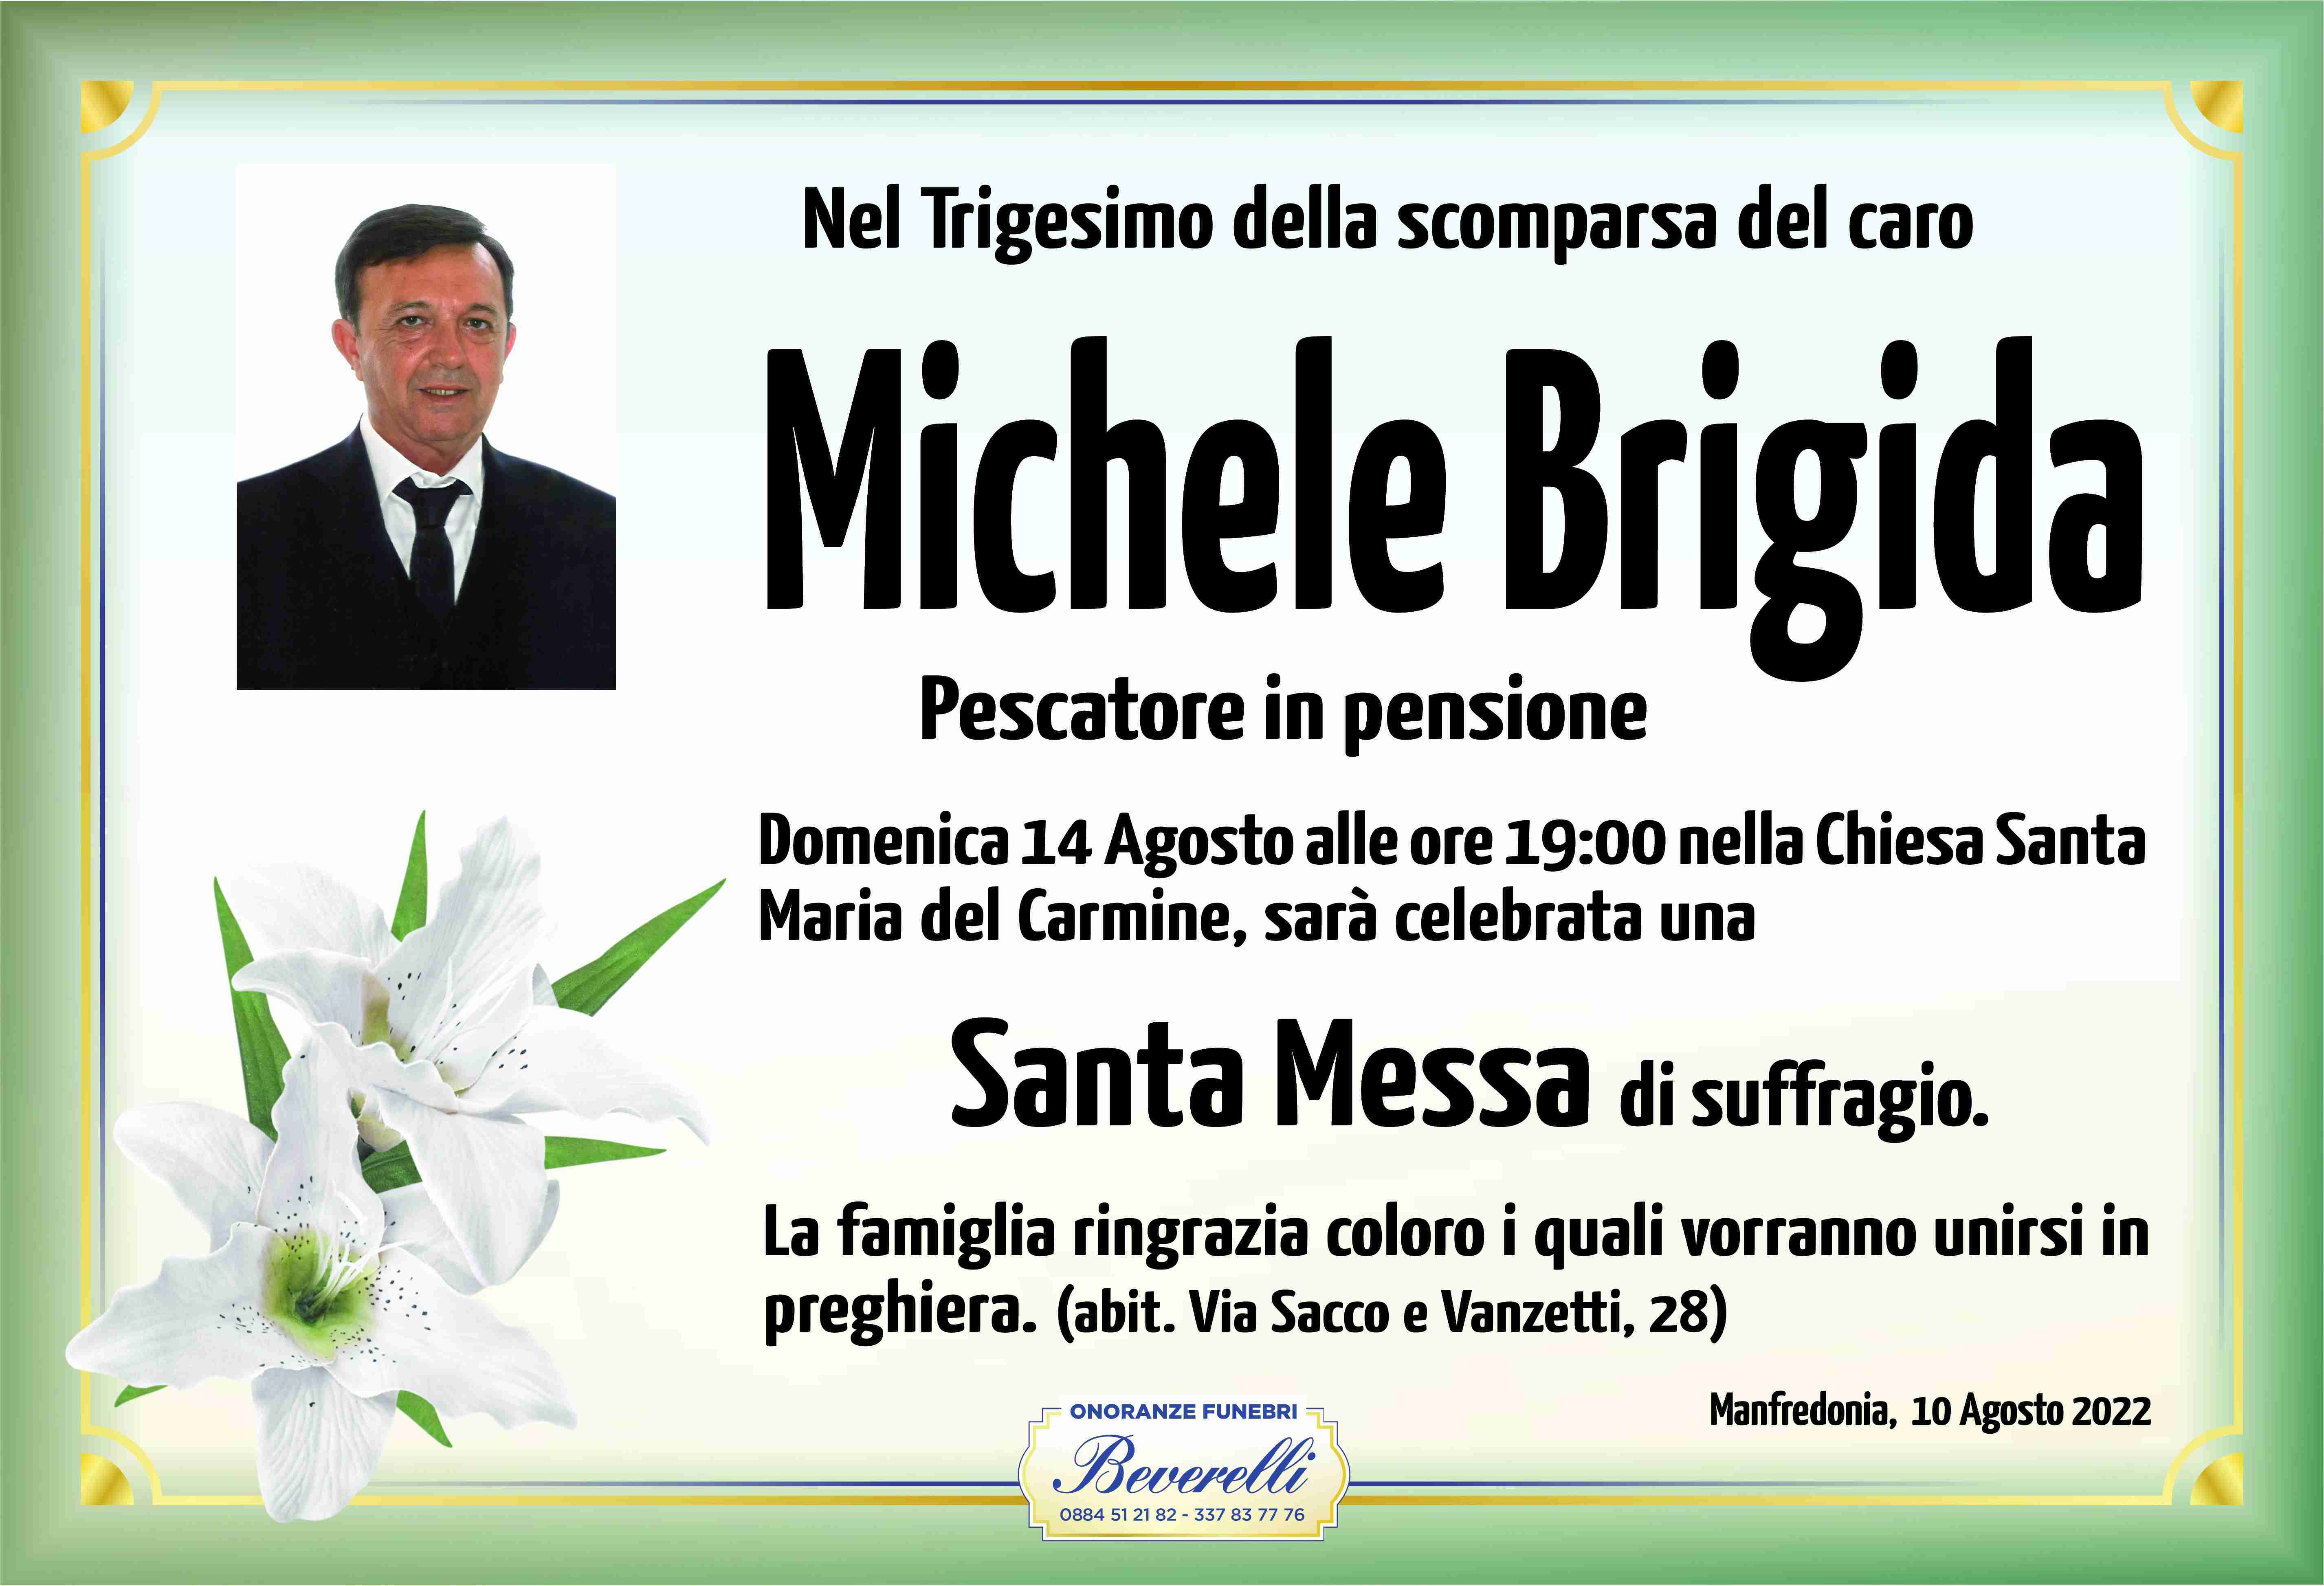 Michele Brigida